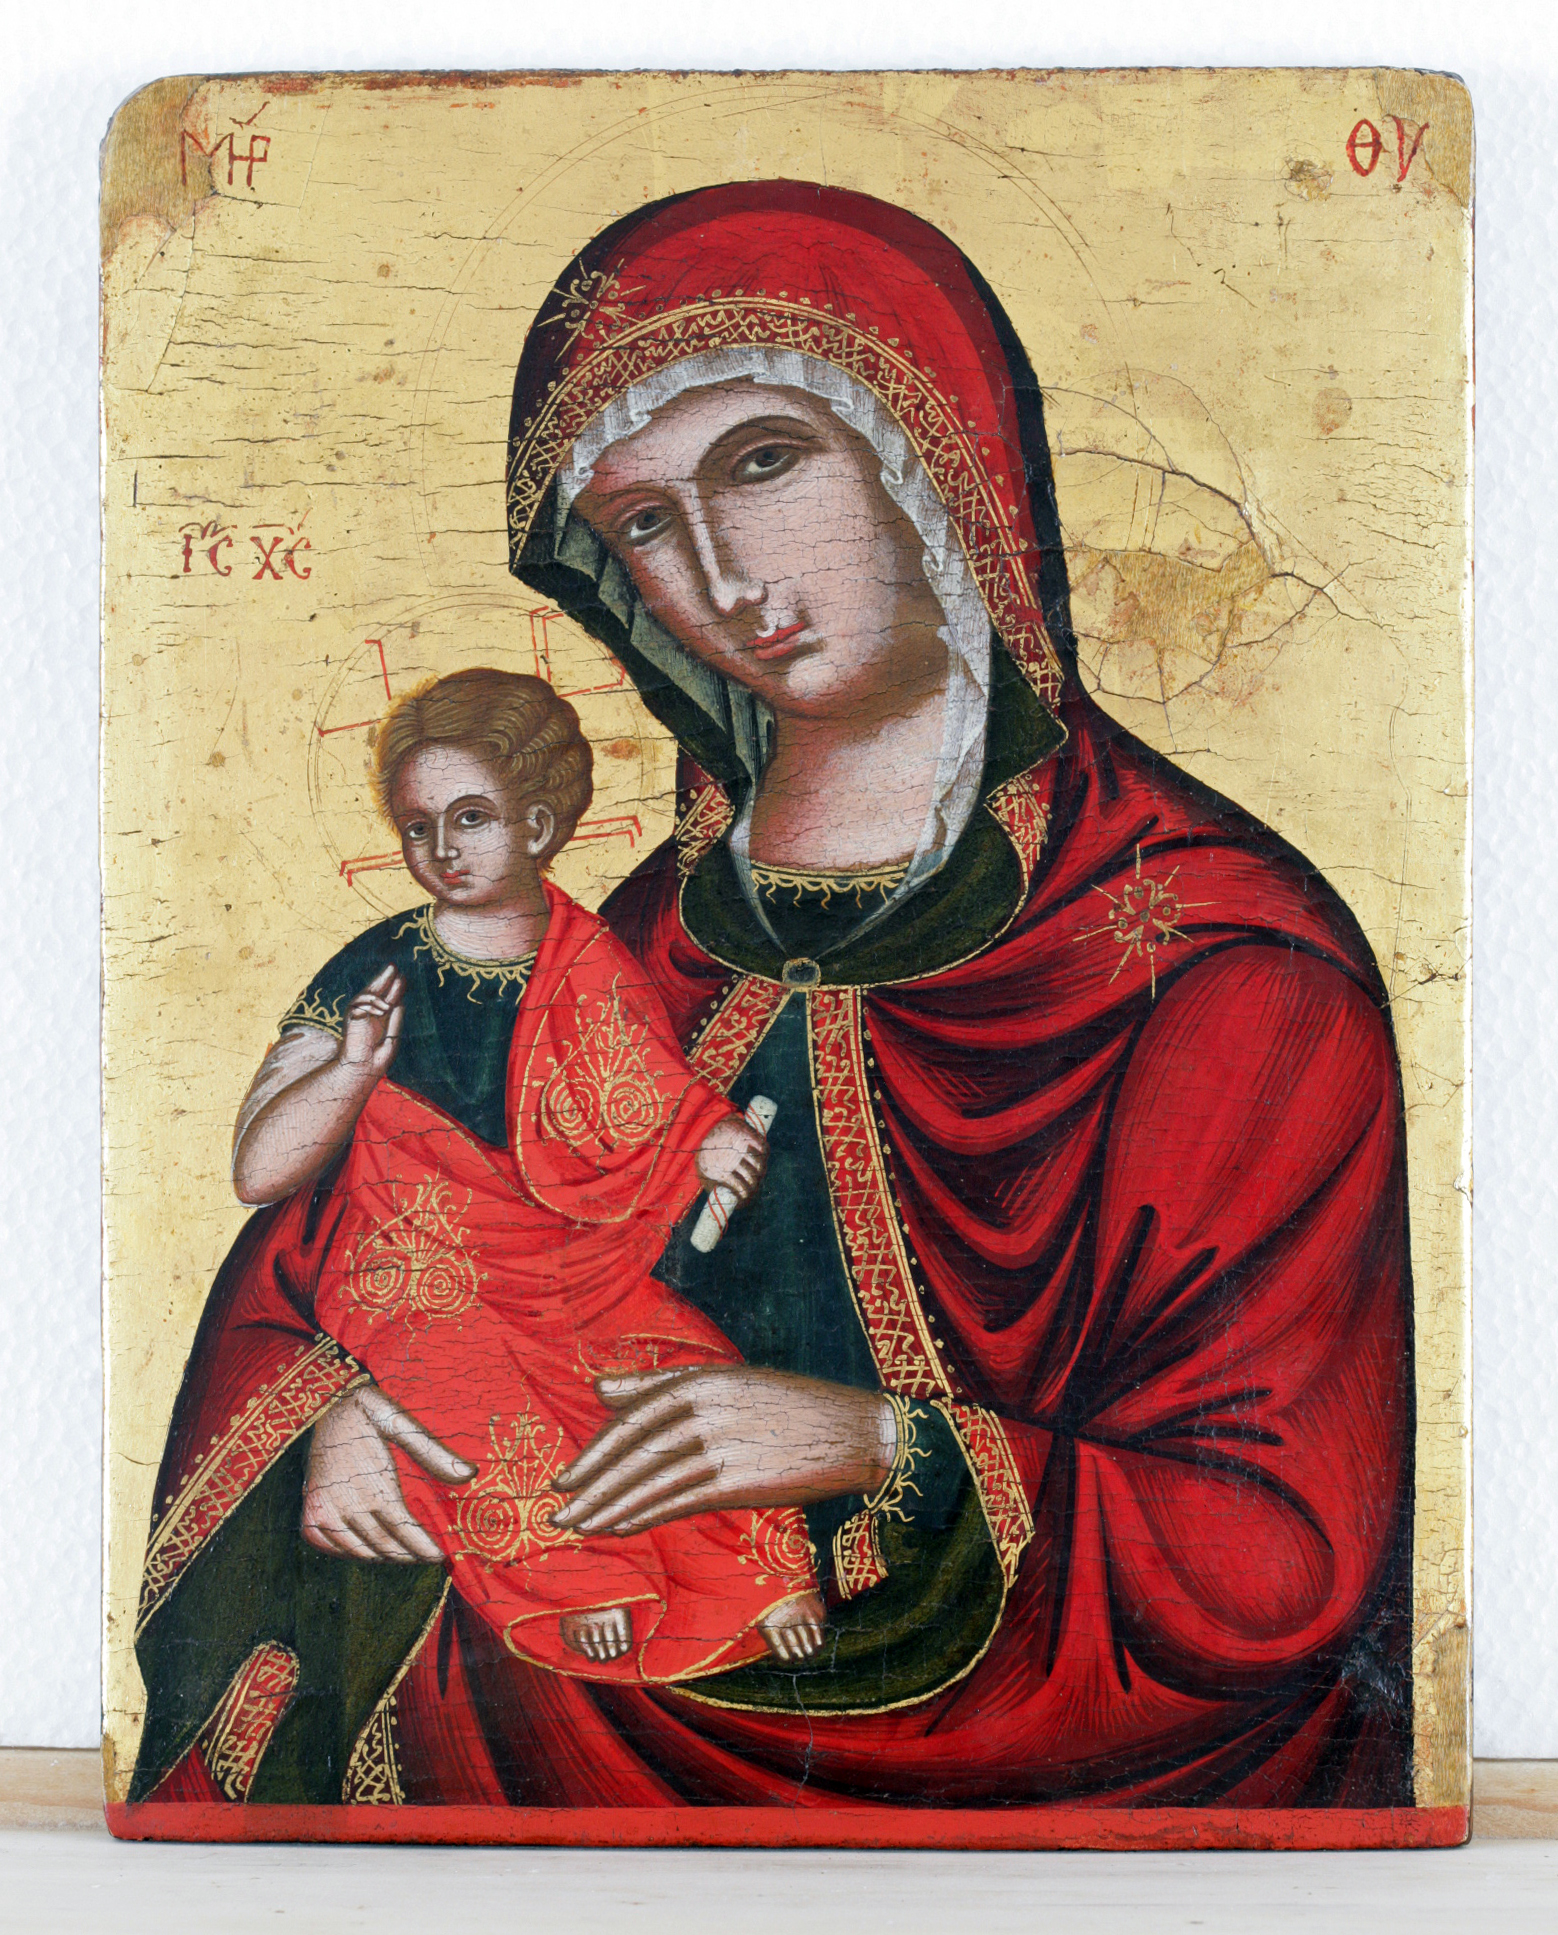 Vergine hodegetria (icona, opera isolata) - scuola cretese-veneziana (sec. XVI-XVII)